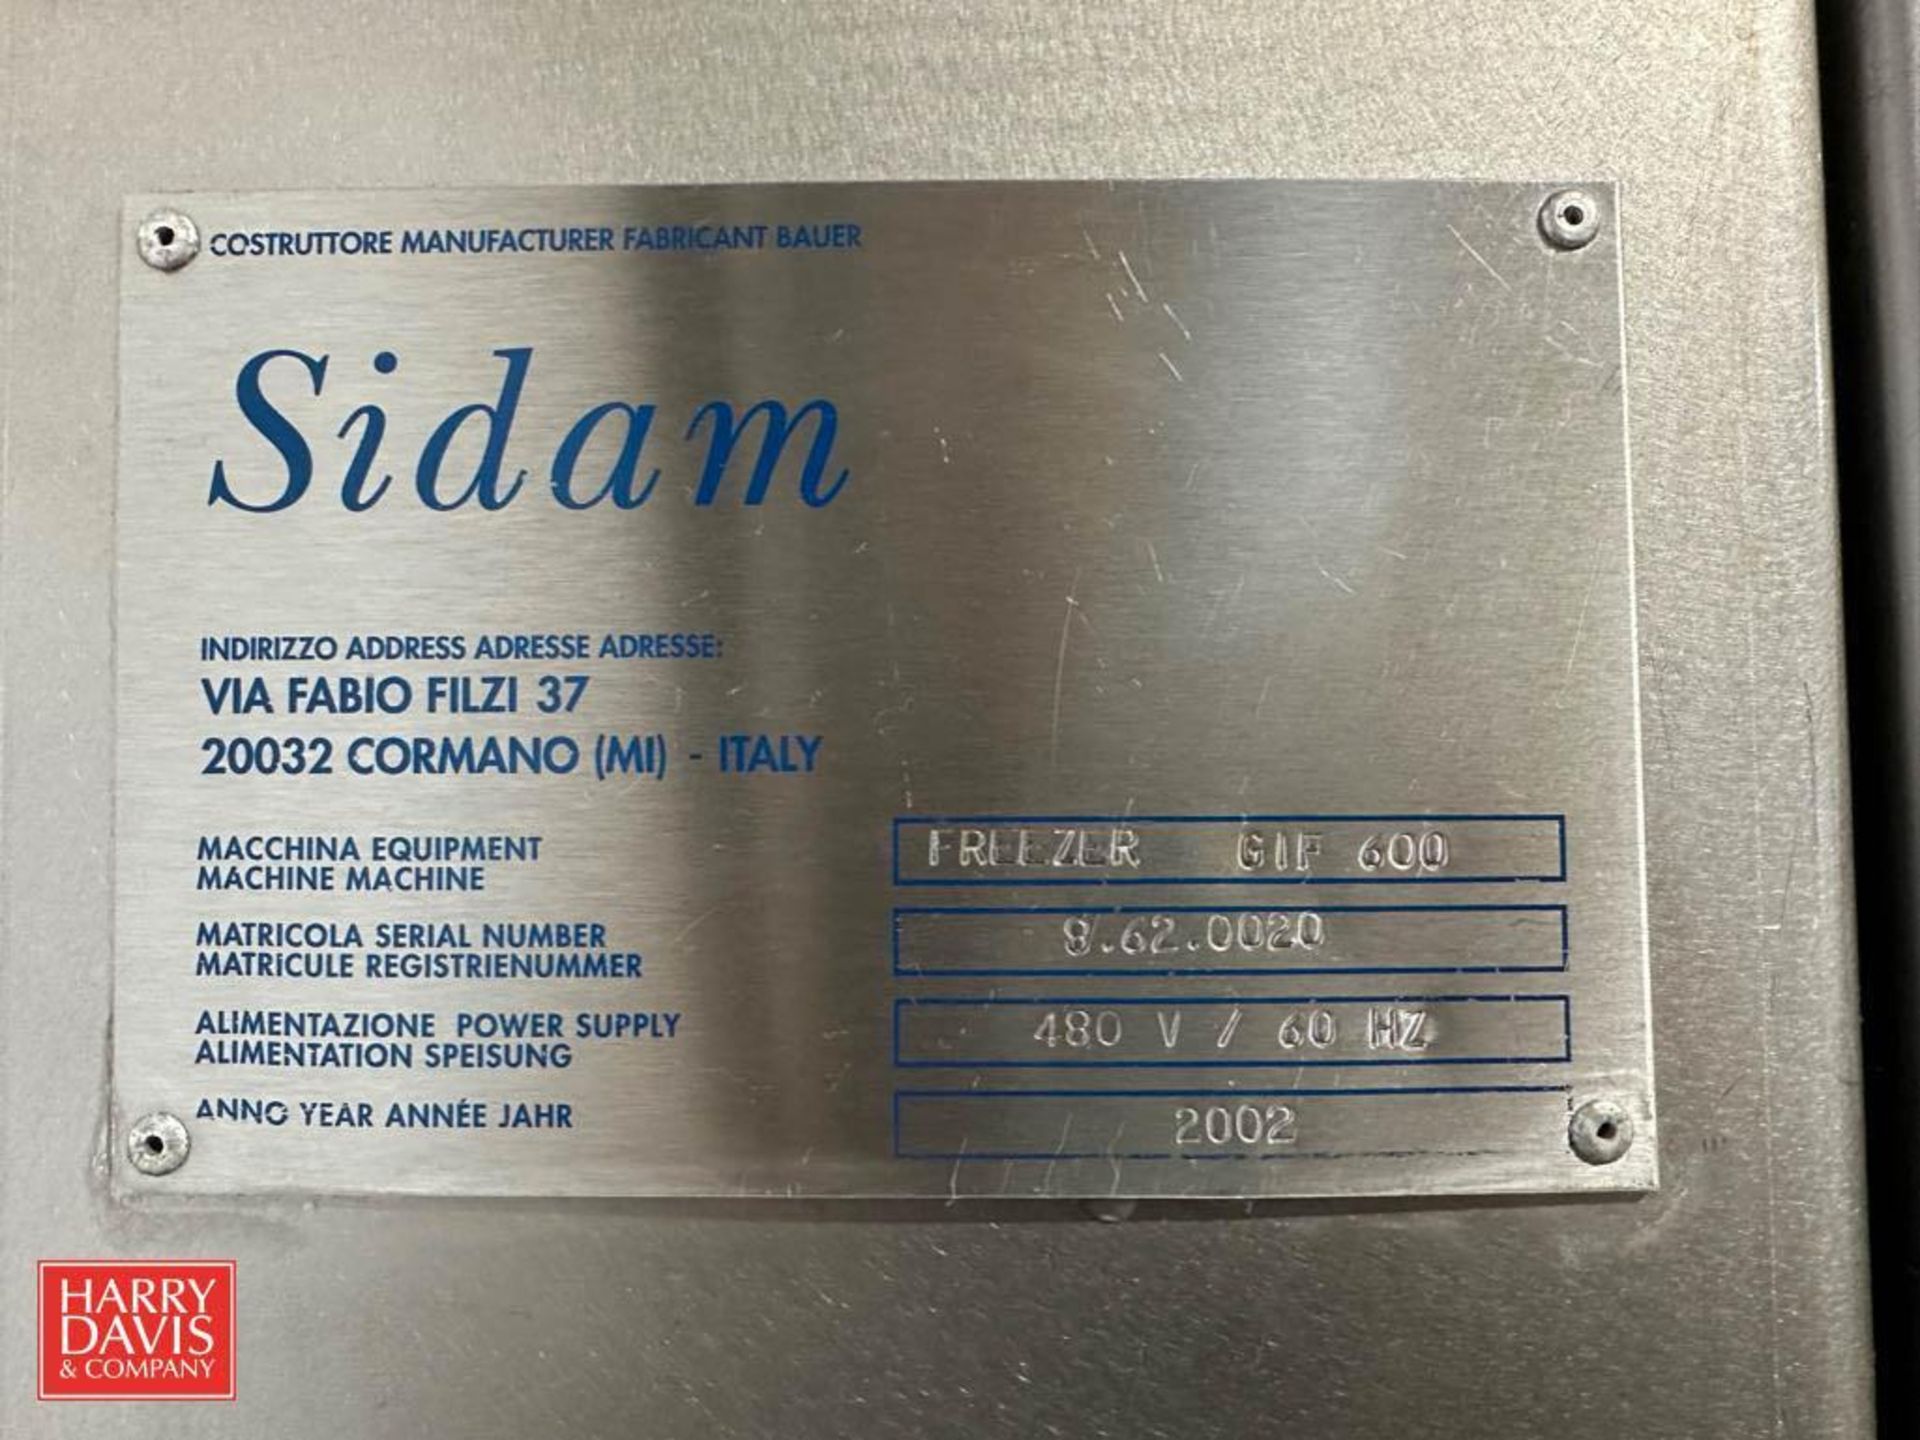 Gram Sidam S/S Ice Cream Freezer, Model: GIF600, S/N: 8.62.0020 with Copeland R404A Compressor - Image 5 of 7